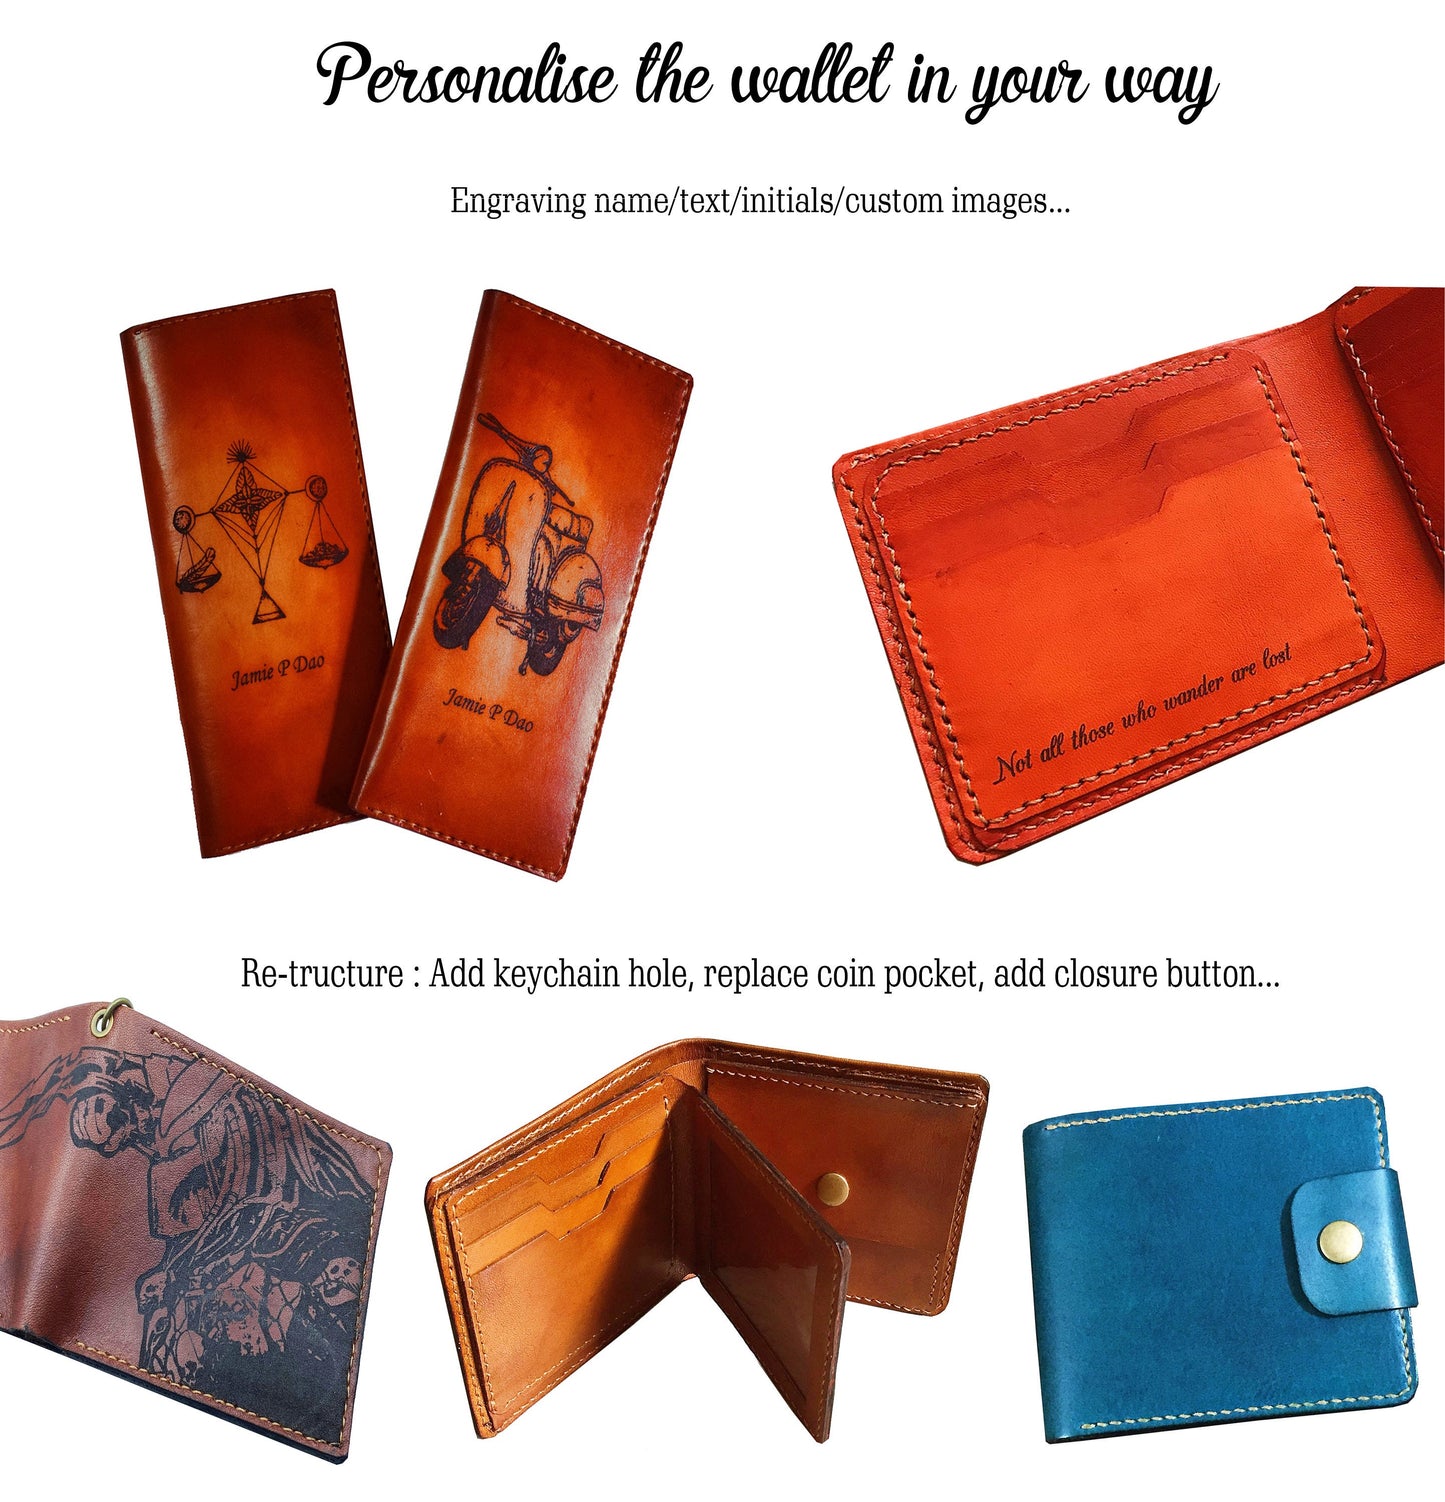 Frog drawing pattern leather men's wallet, customized engraving wallet for men, animal pattern wallet, gift for men, amphibians pattern gift